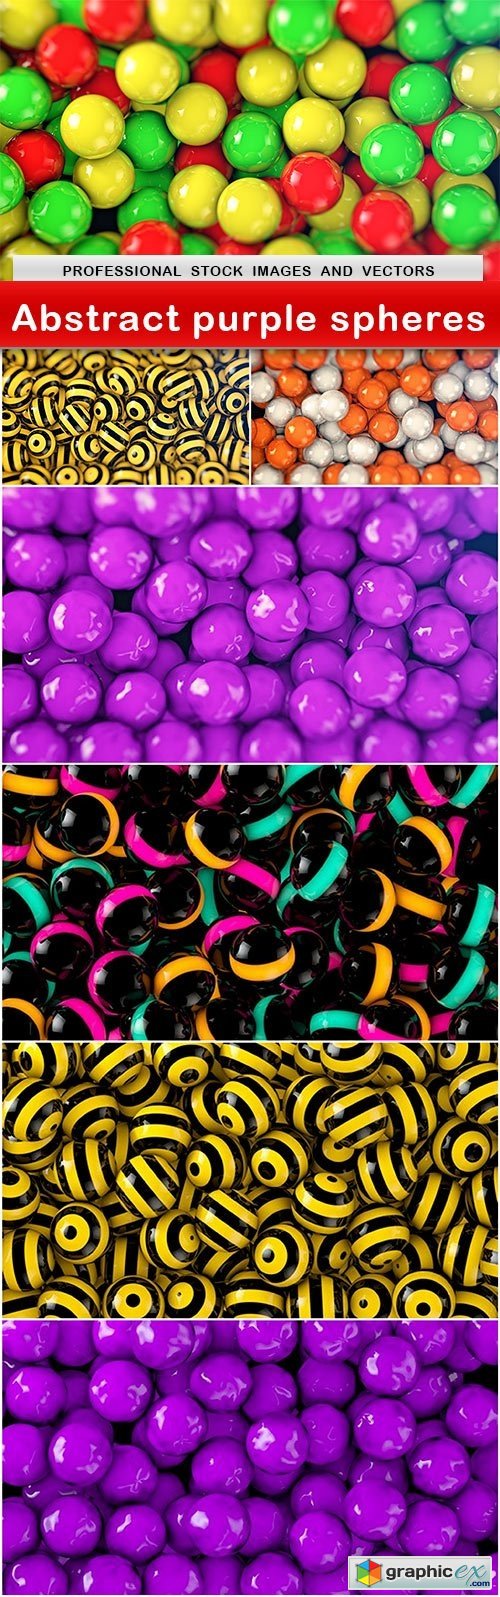 Abstract purple spheres - 7 UHQ JPEG